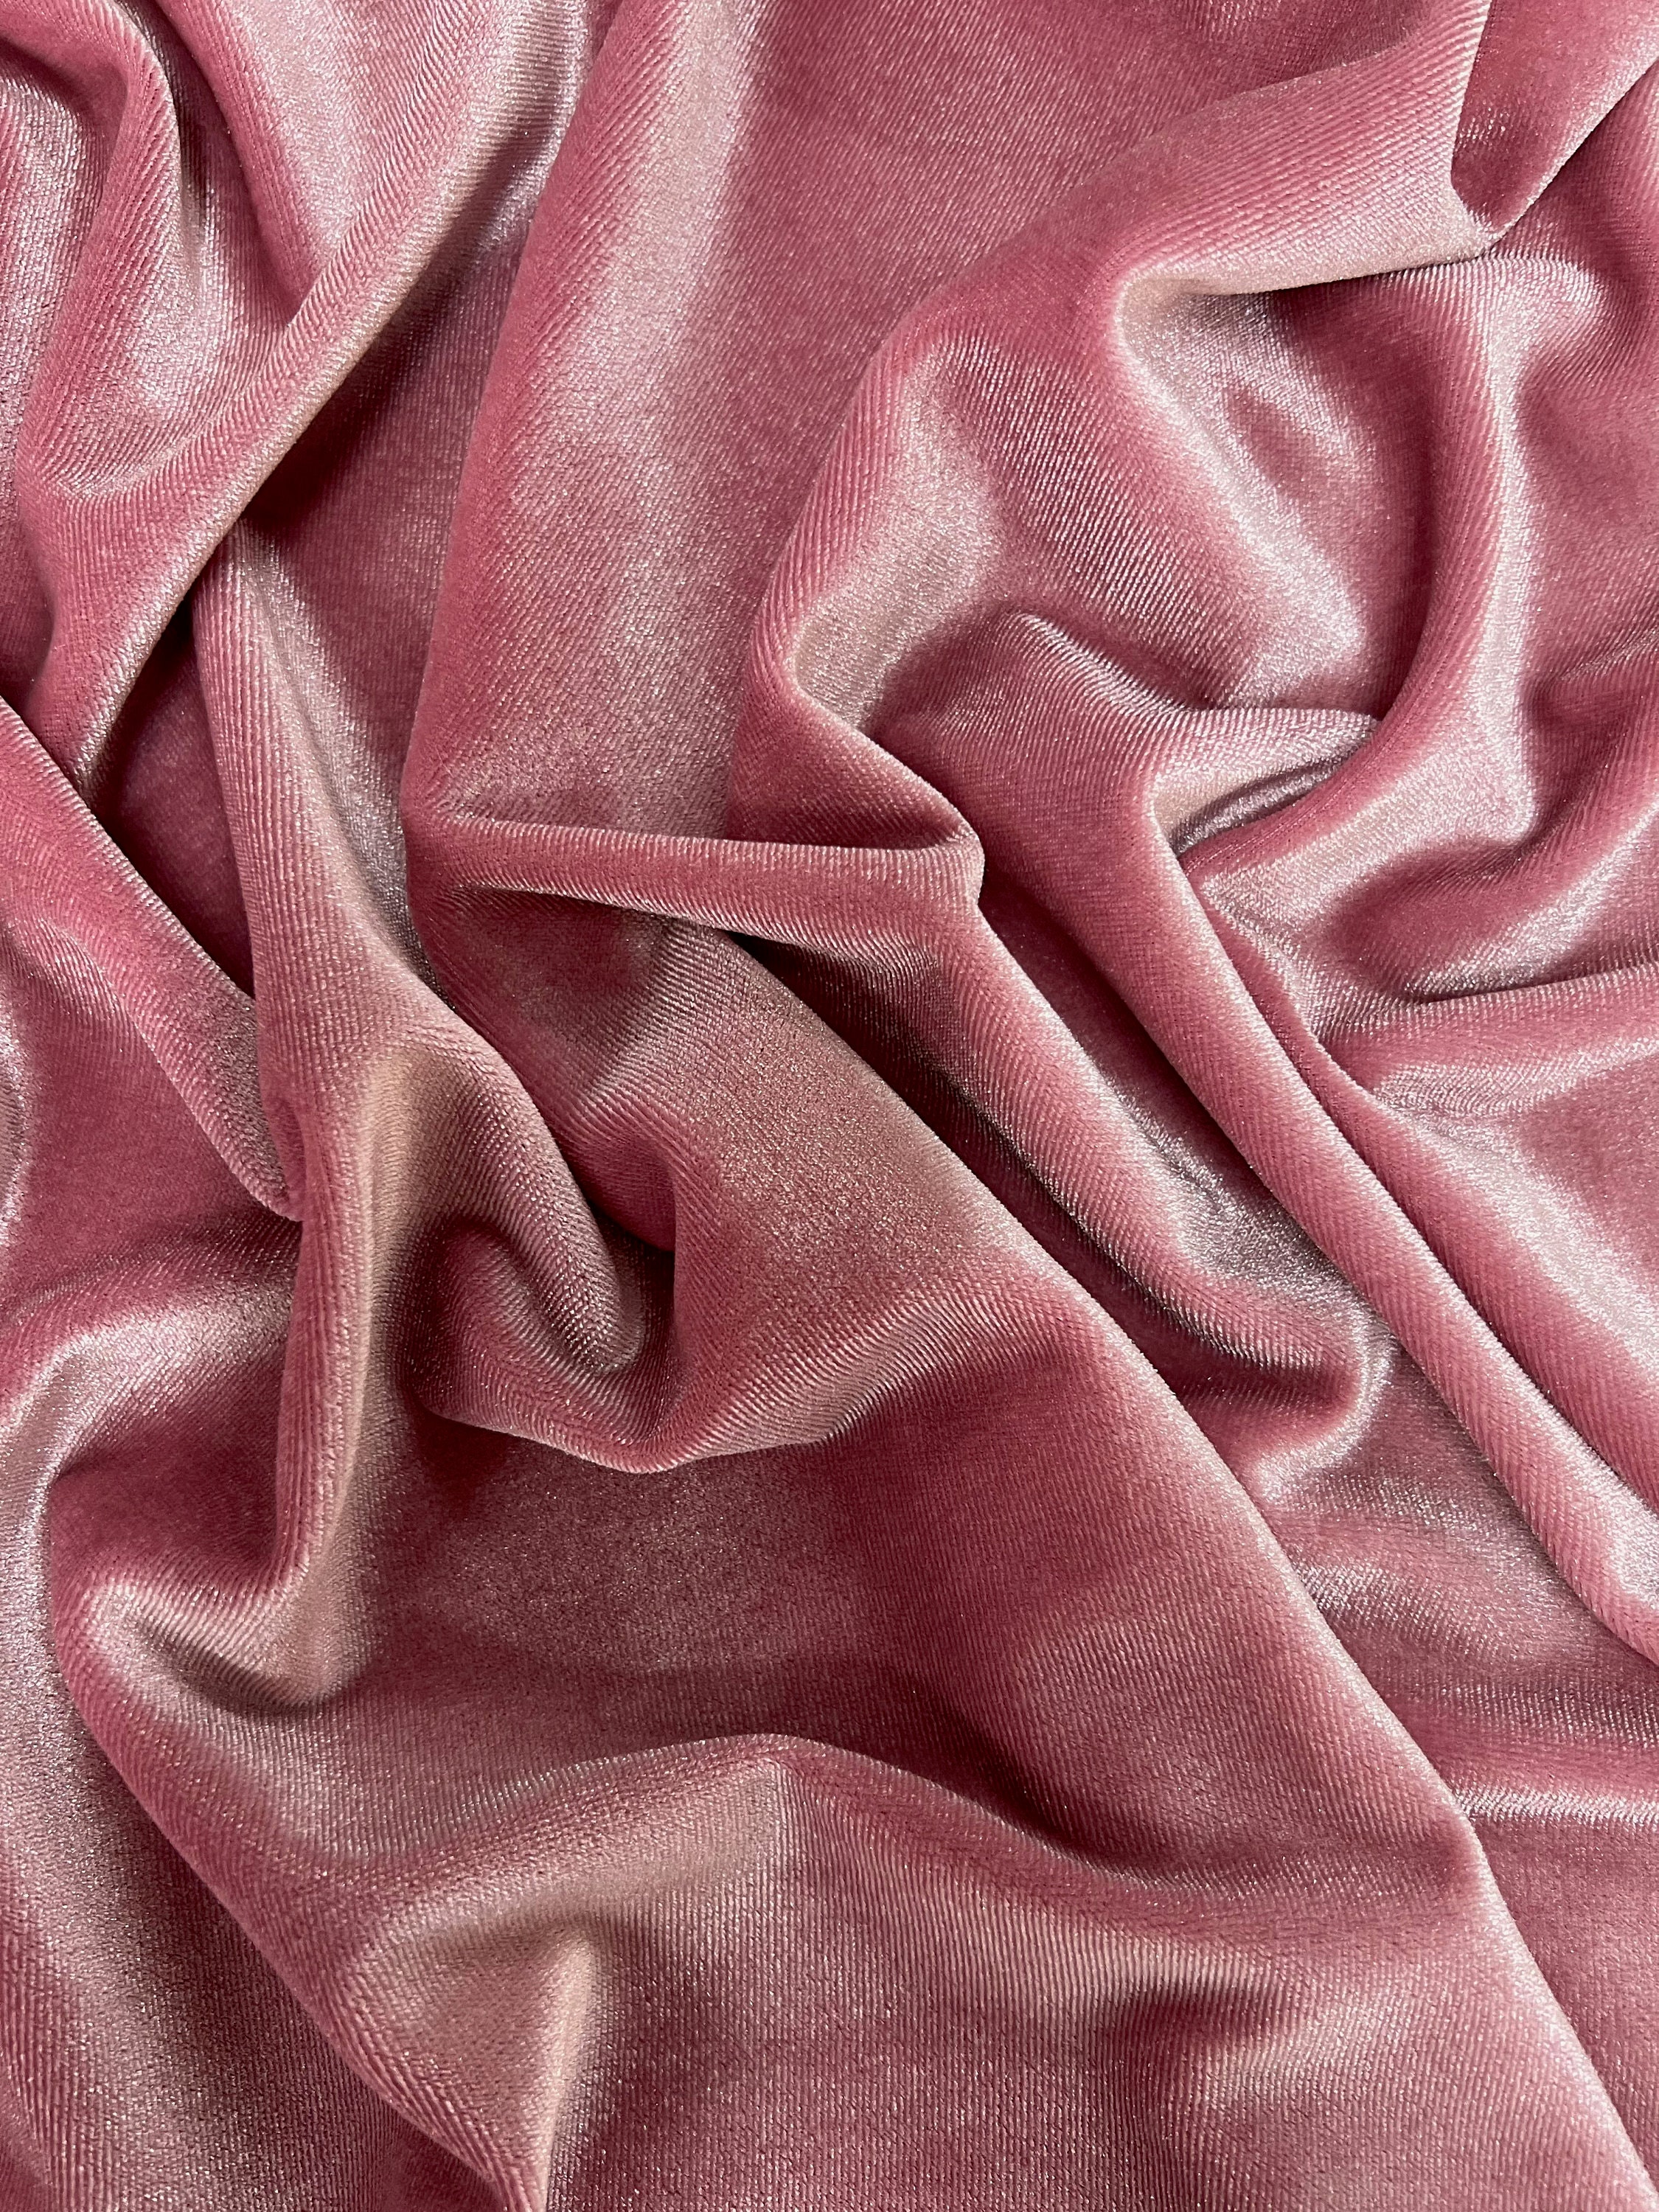 Dusty Pink Velvet Upholstery Fabric by the Yard Dusty Pink Velvet